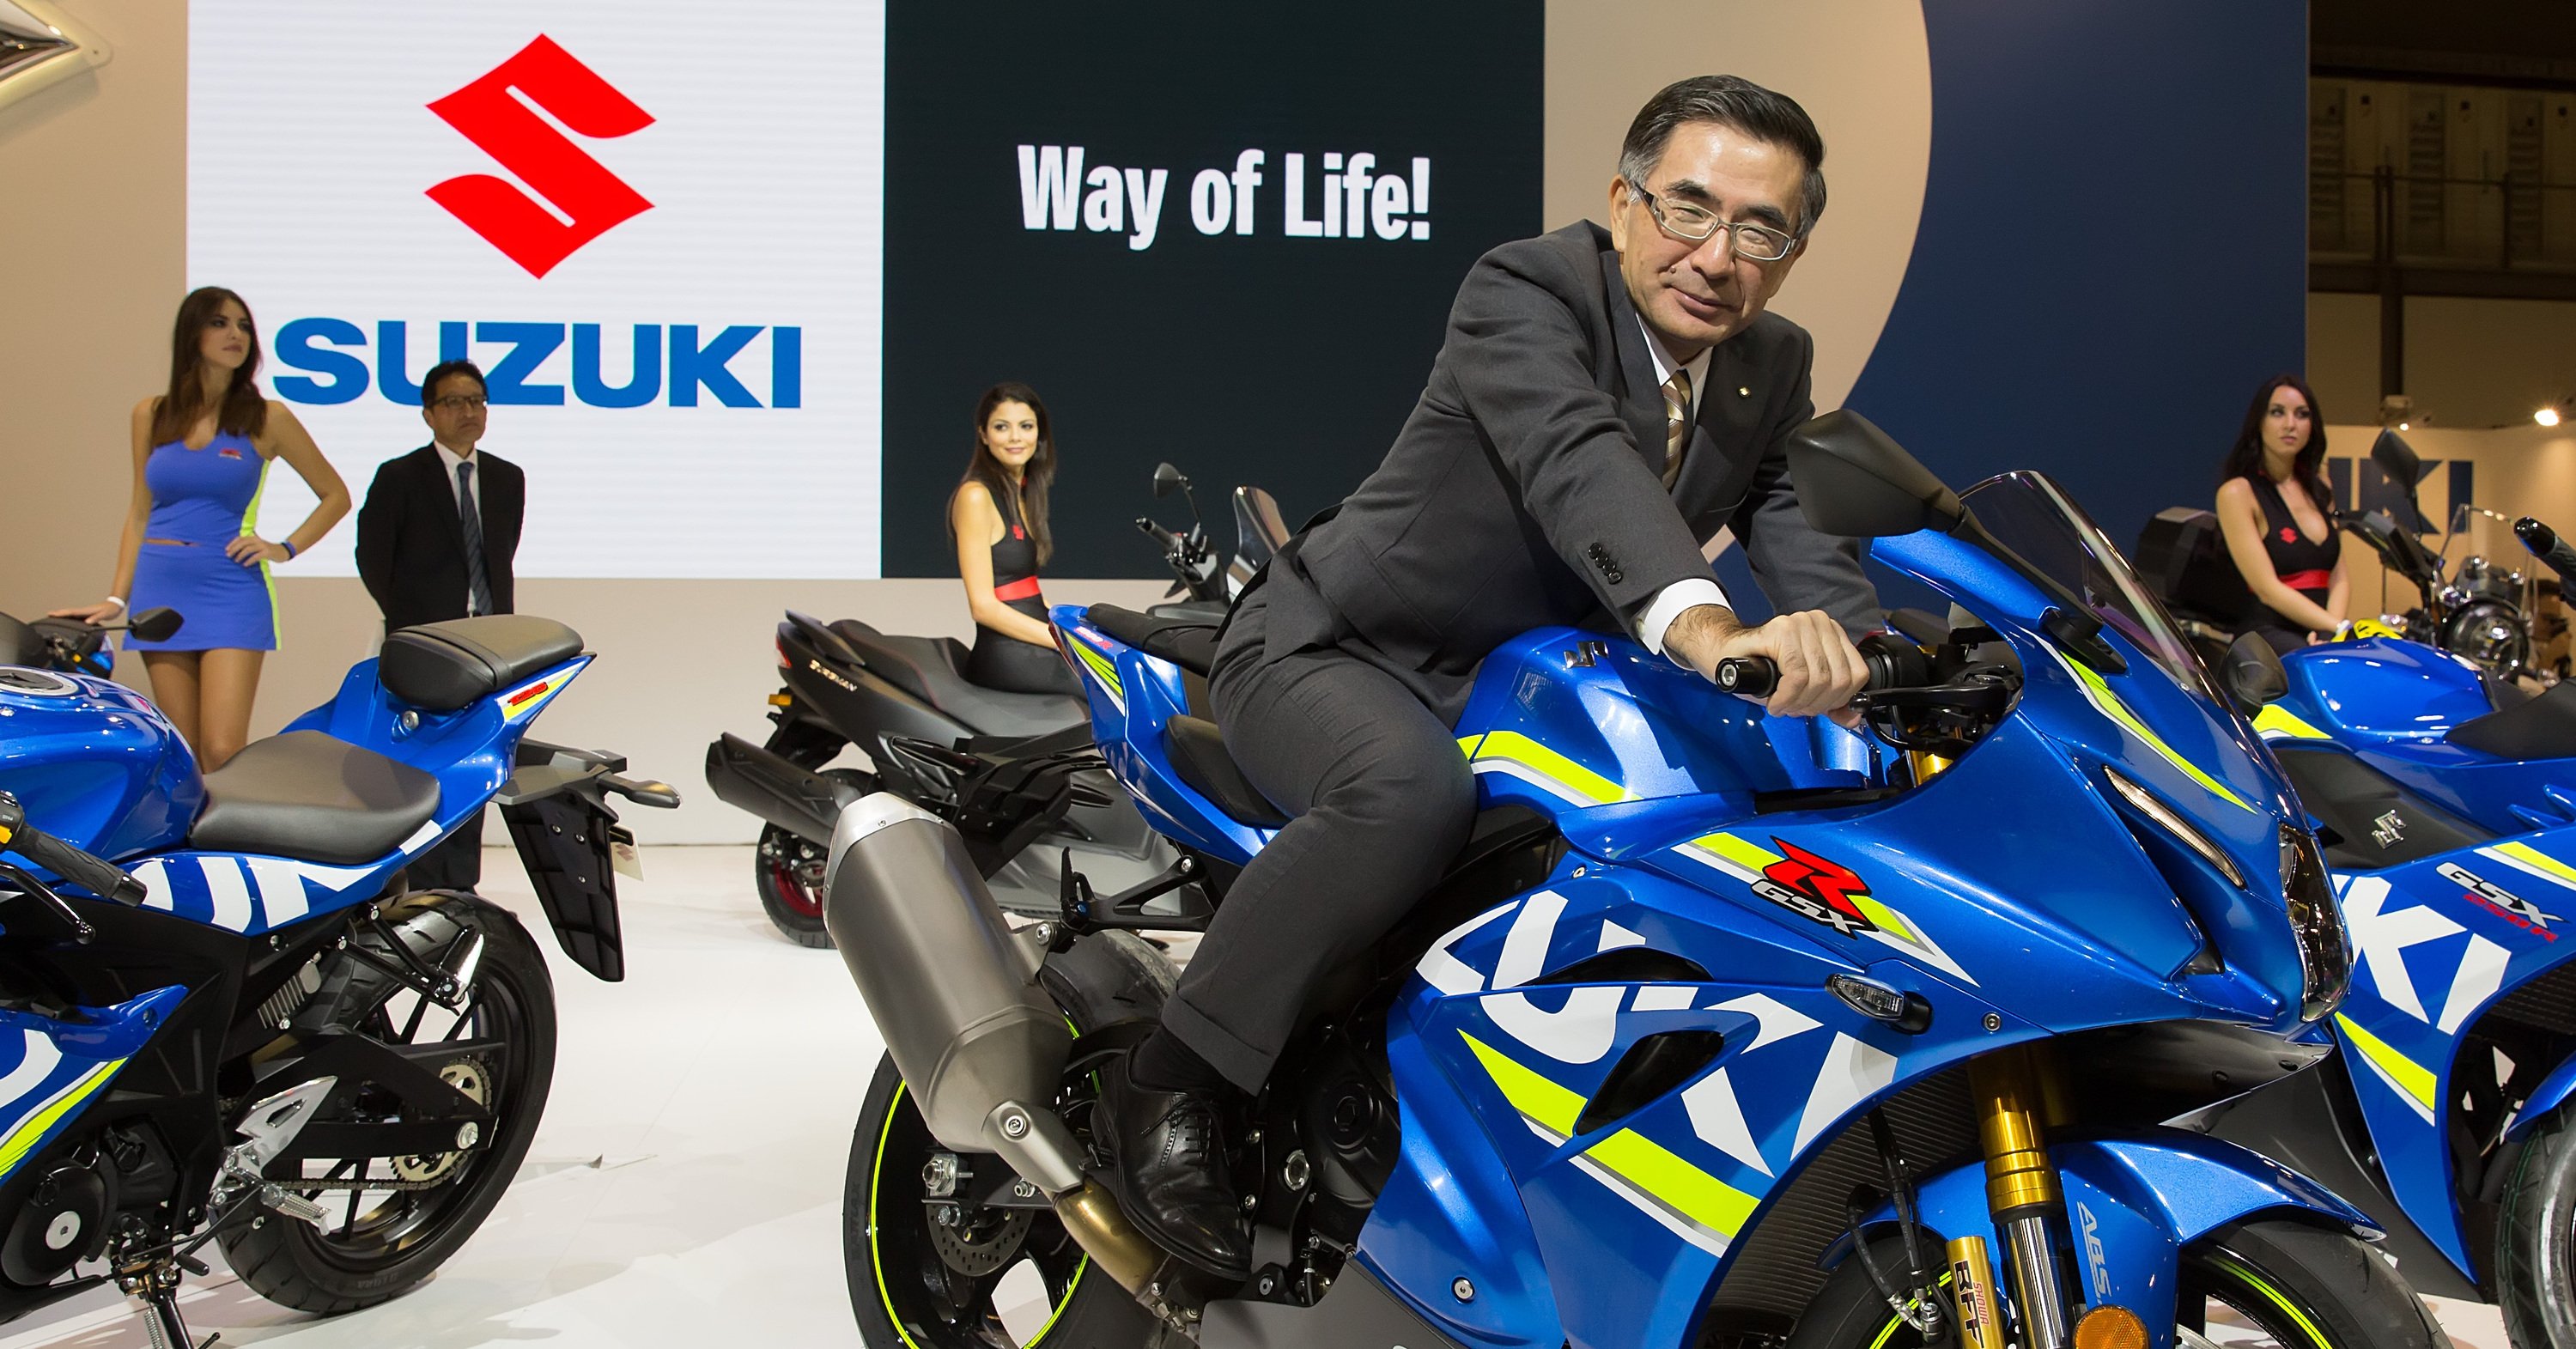 Toshihiro Suzuki: &ldquo;Vedrete modelli Suzuki molto innovativi&rdquo;